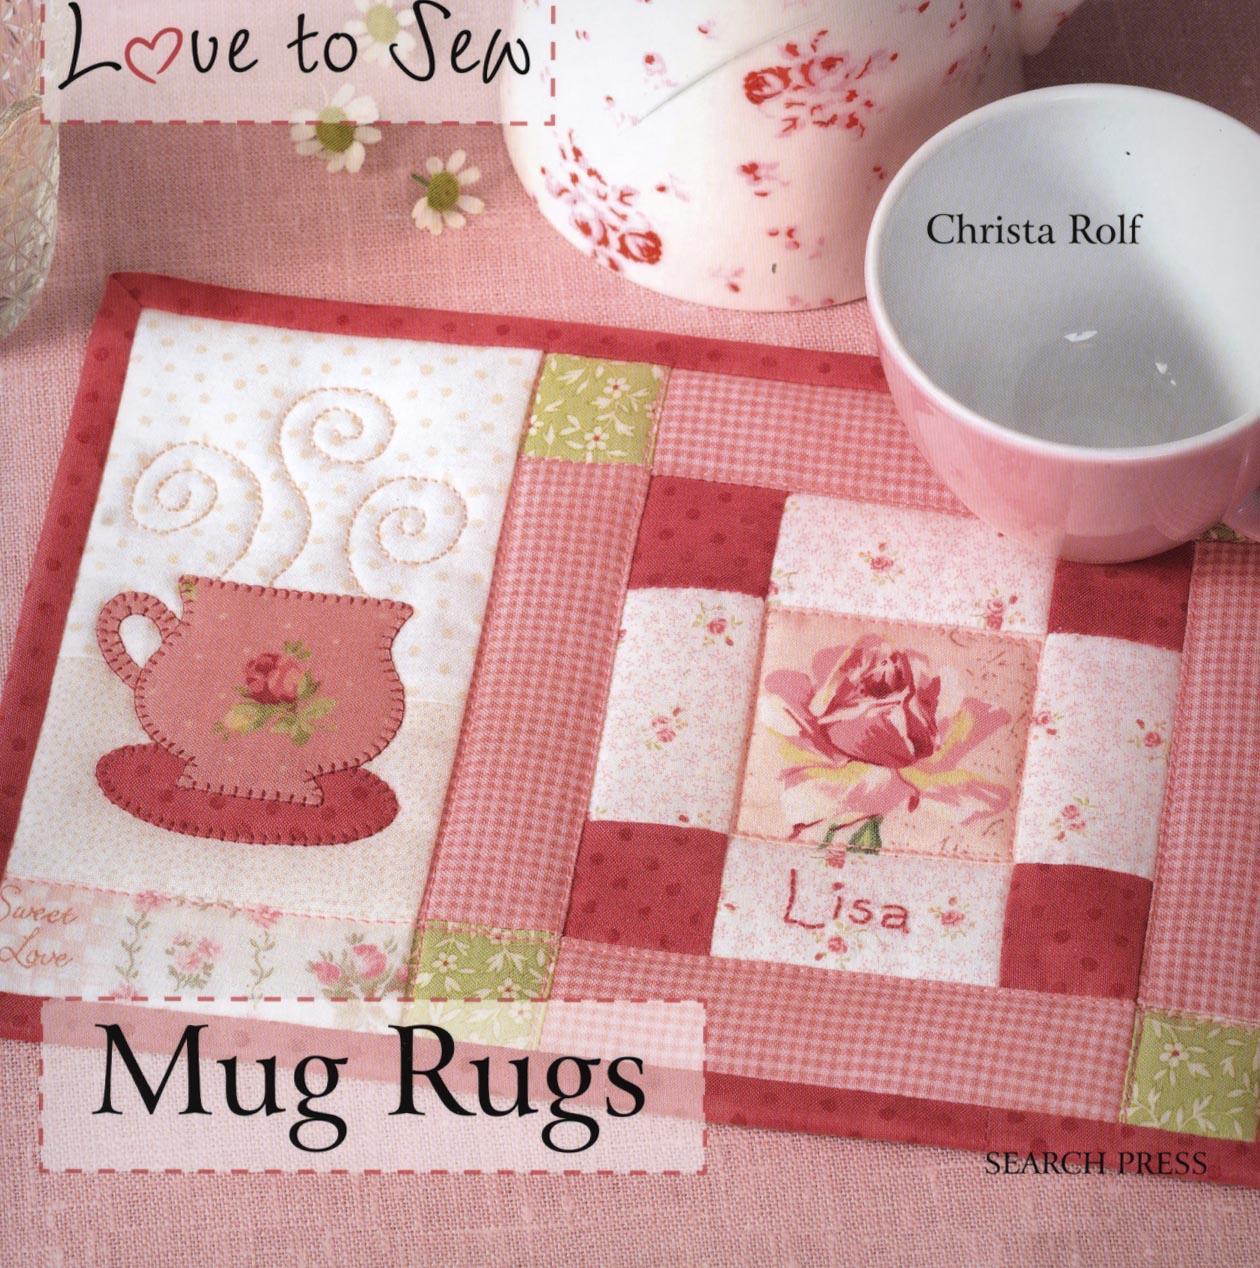 Love to Sew: Mug Rugs